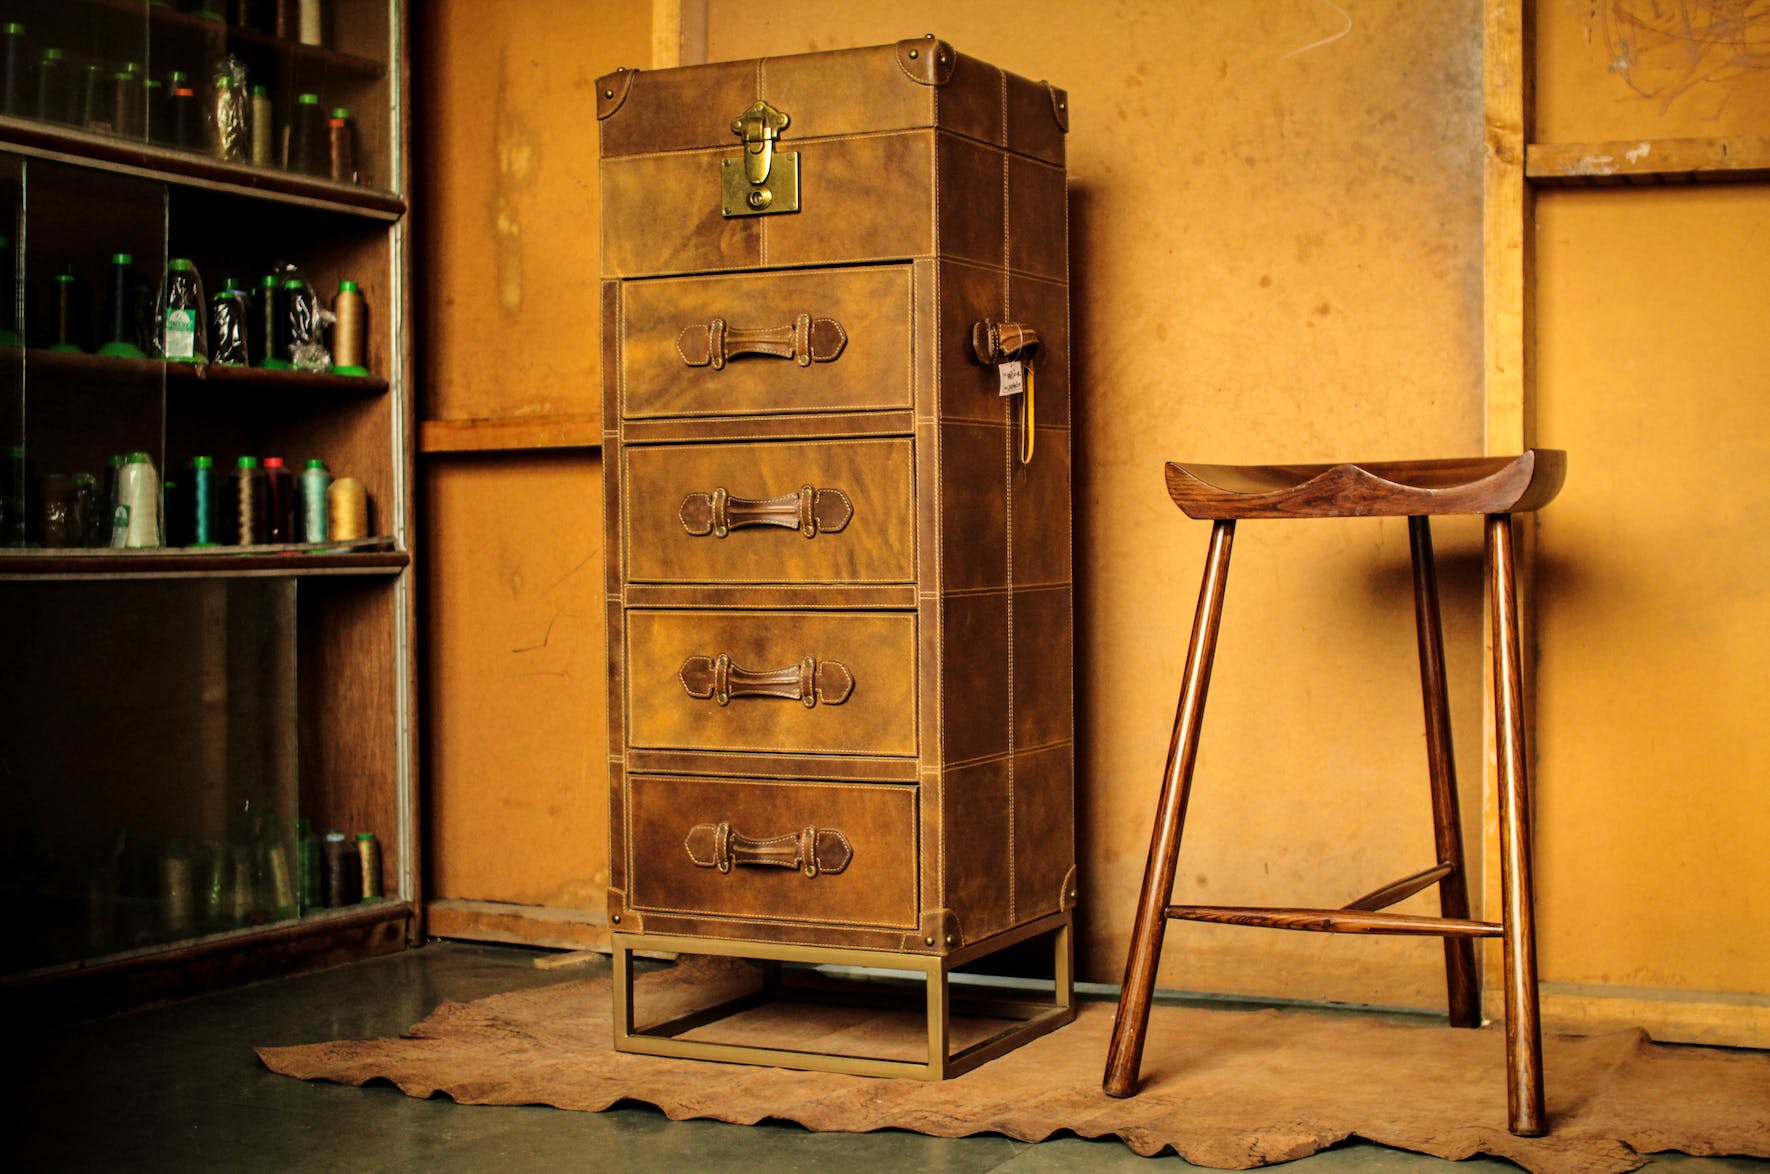 Furniture,Shelf,Desk,Chest of drawers,Shelving,Room,Antique,Still life photography,Wood,Drawer